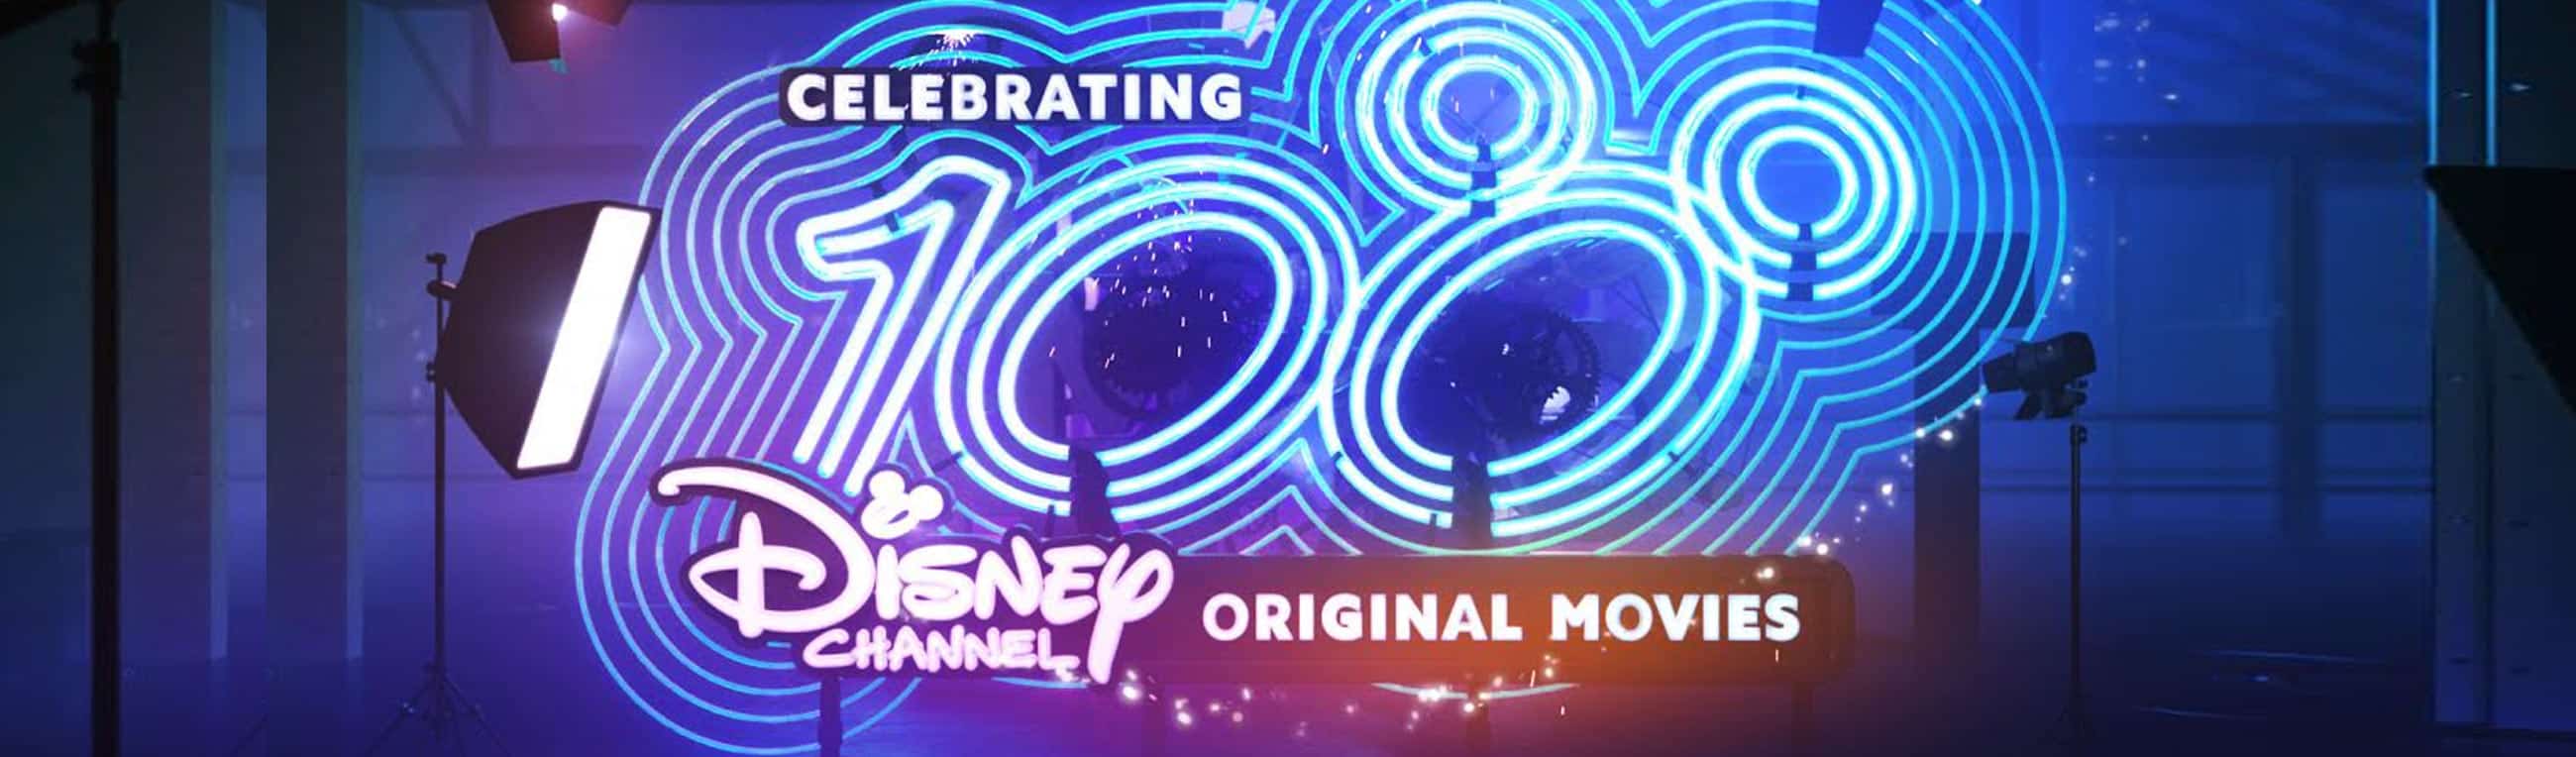 Uitdaging dichters Doe herleven Celebrating Disney Channel's 100th Original Movie